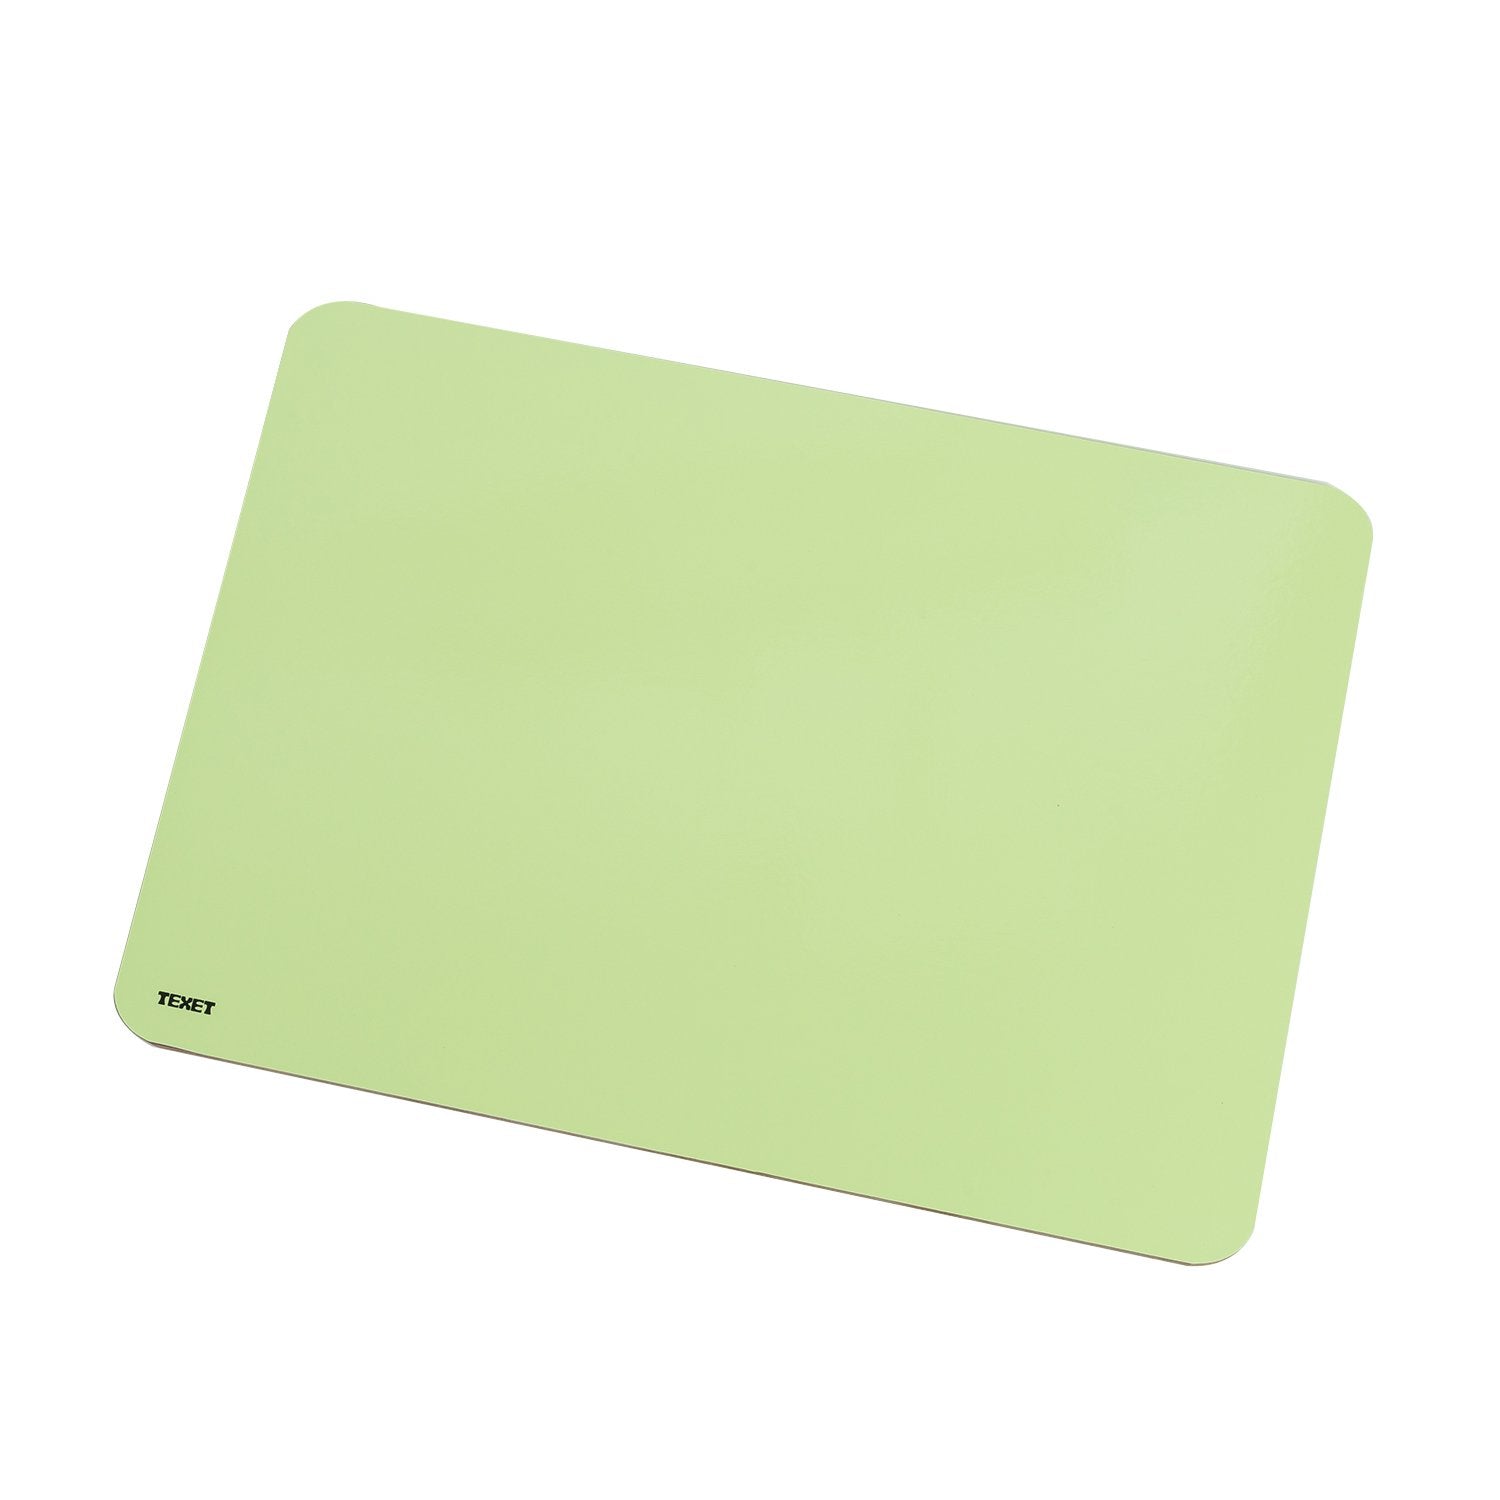 A4 Rigid Plain Double-Sided Lapboard Green PK5